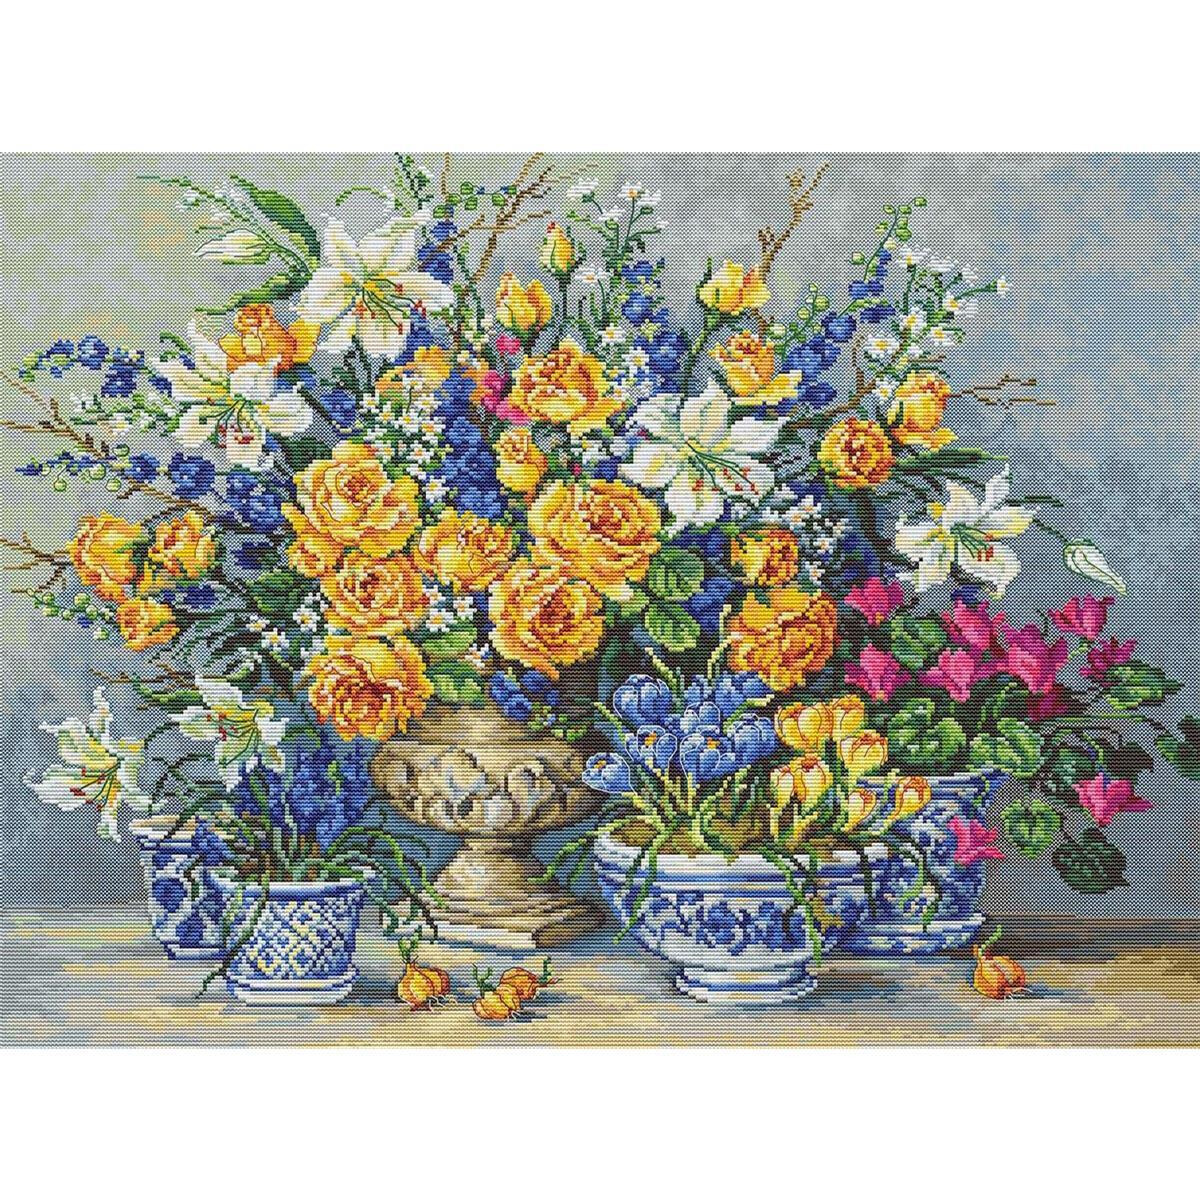 A vibrant floral arrangement consists of yellow roses,...